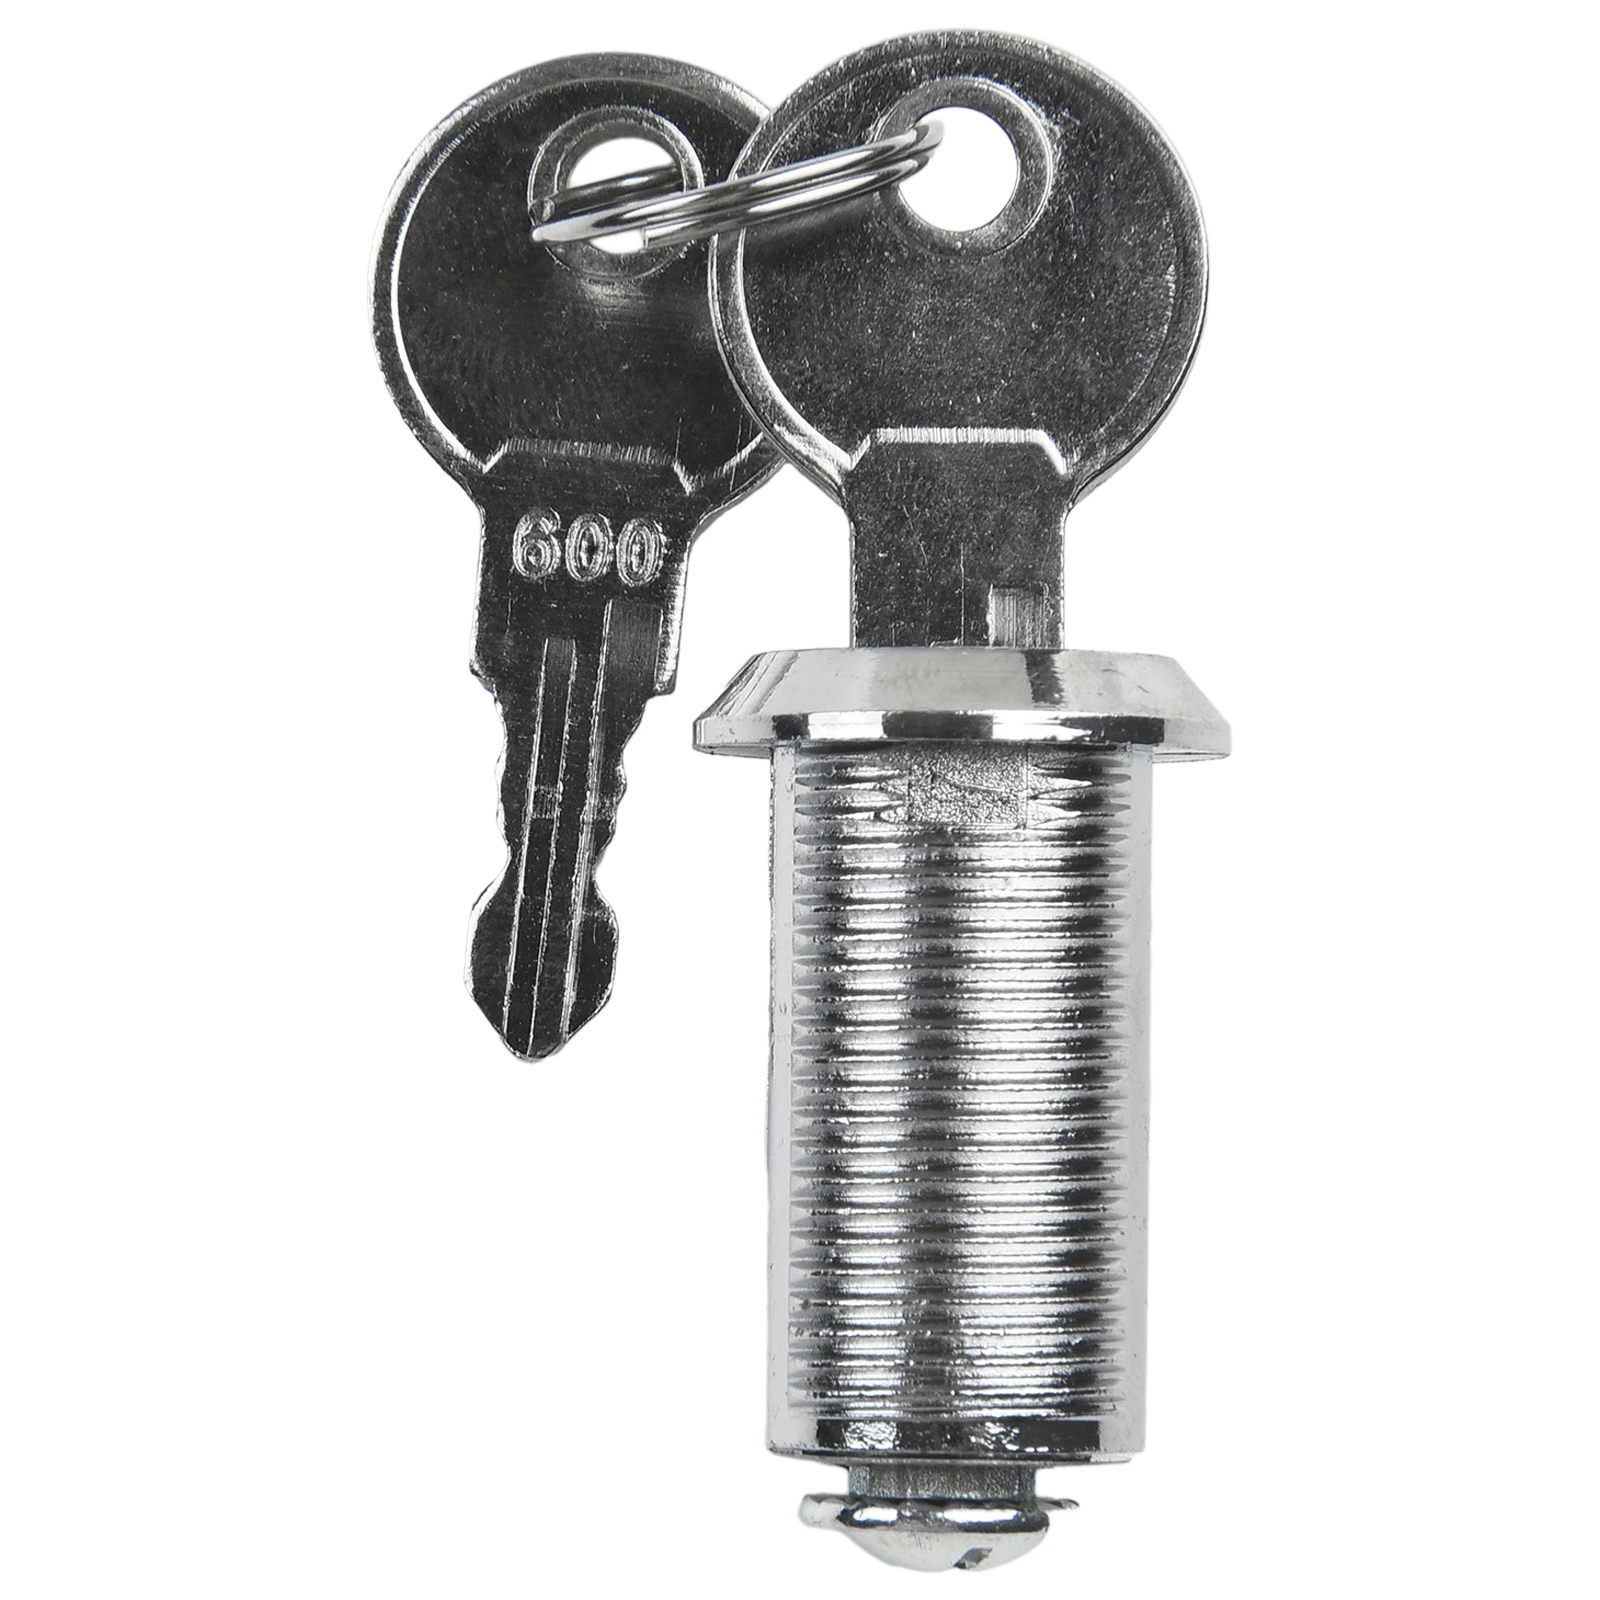 2Pcs Cabinet Cam Locks 30mm With Keys Safe Drawer File RV Locks